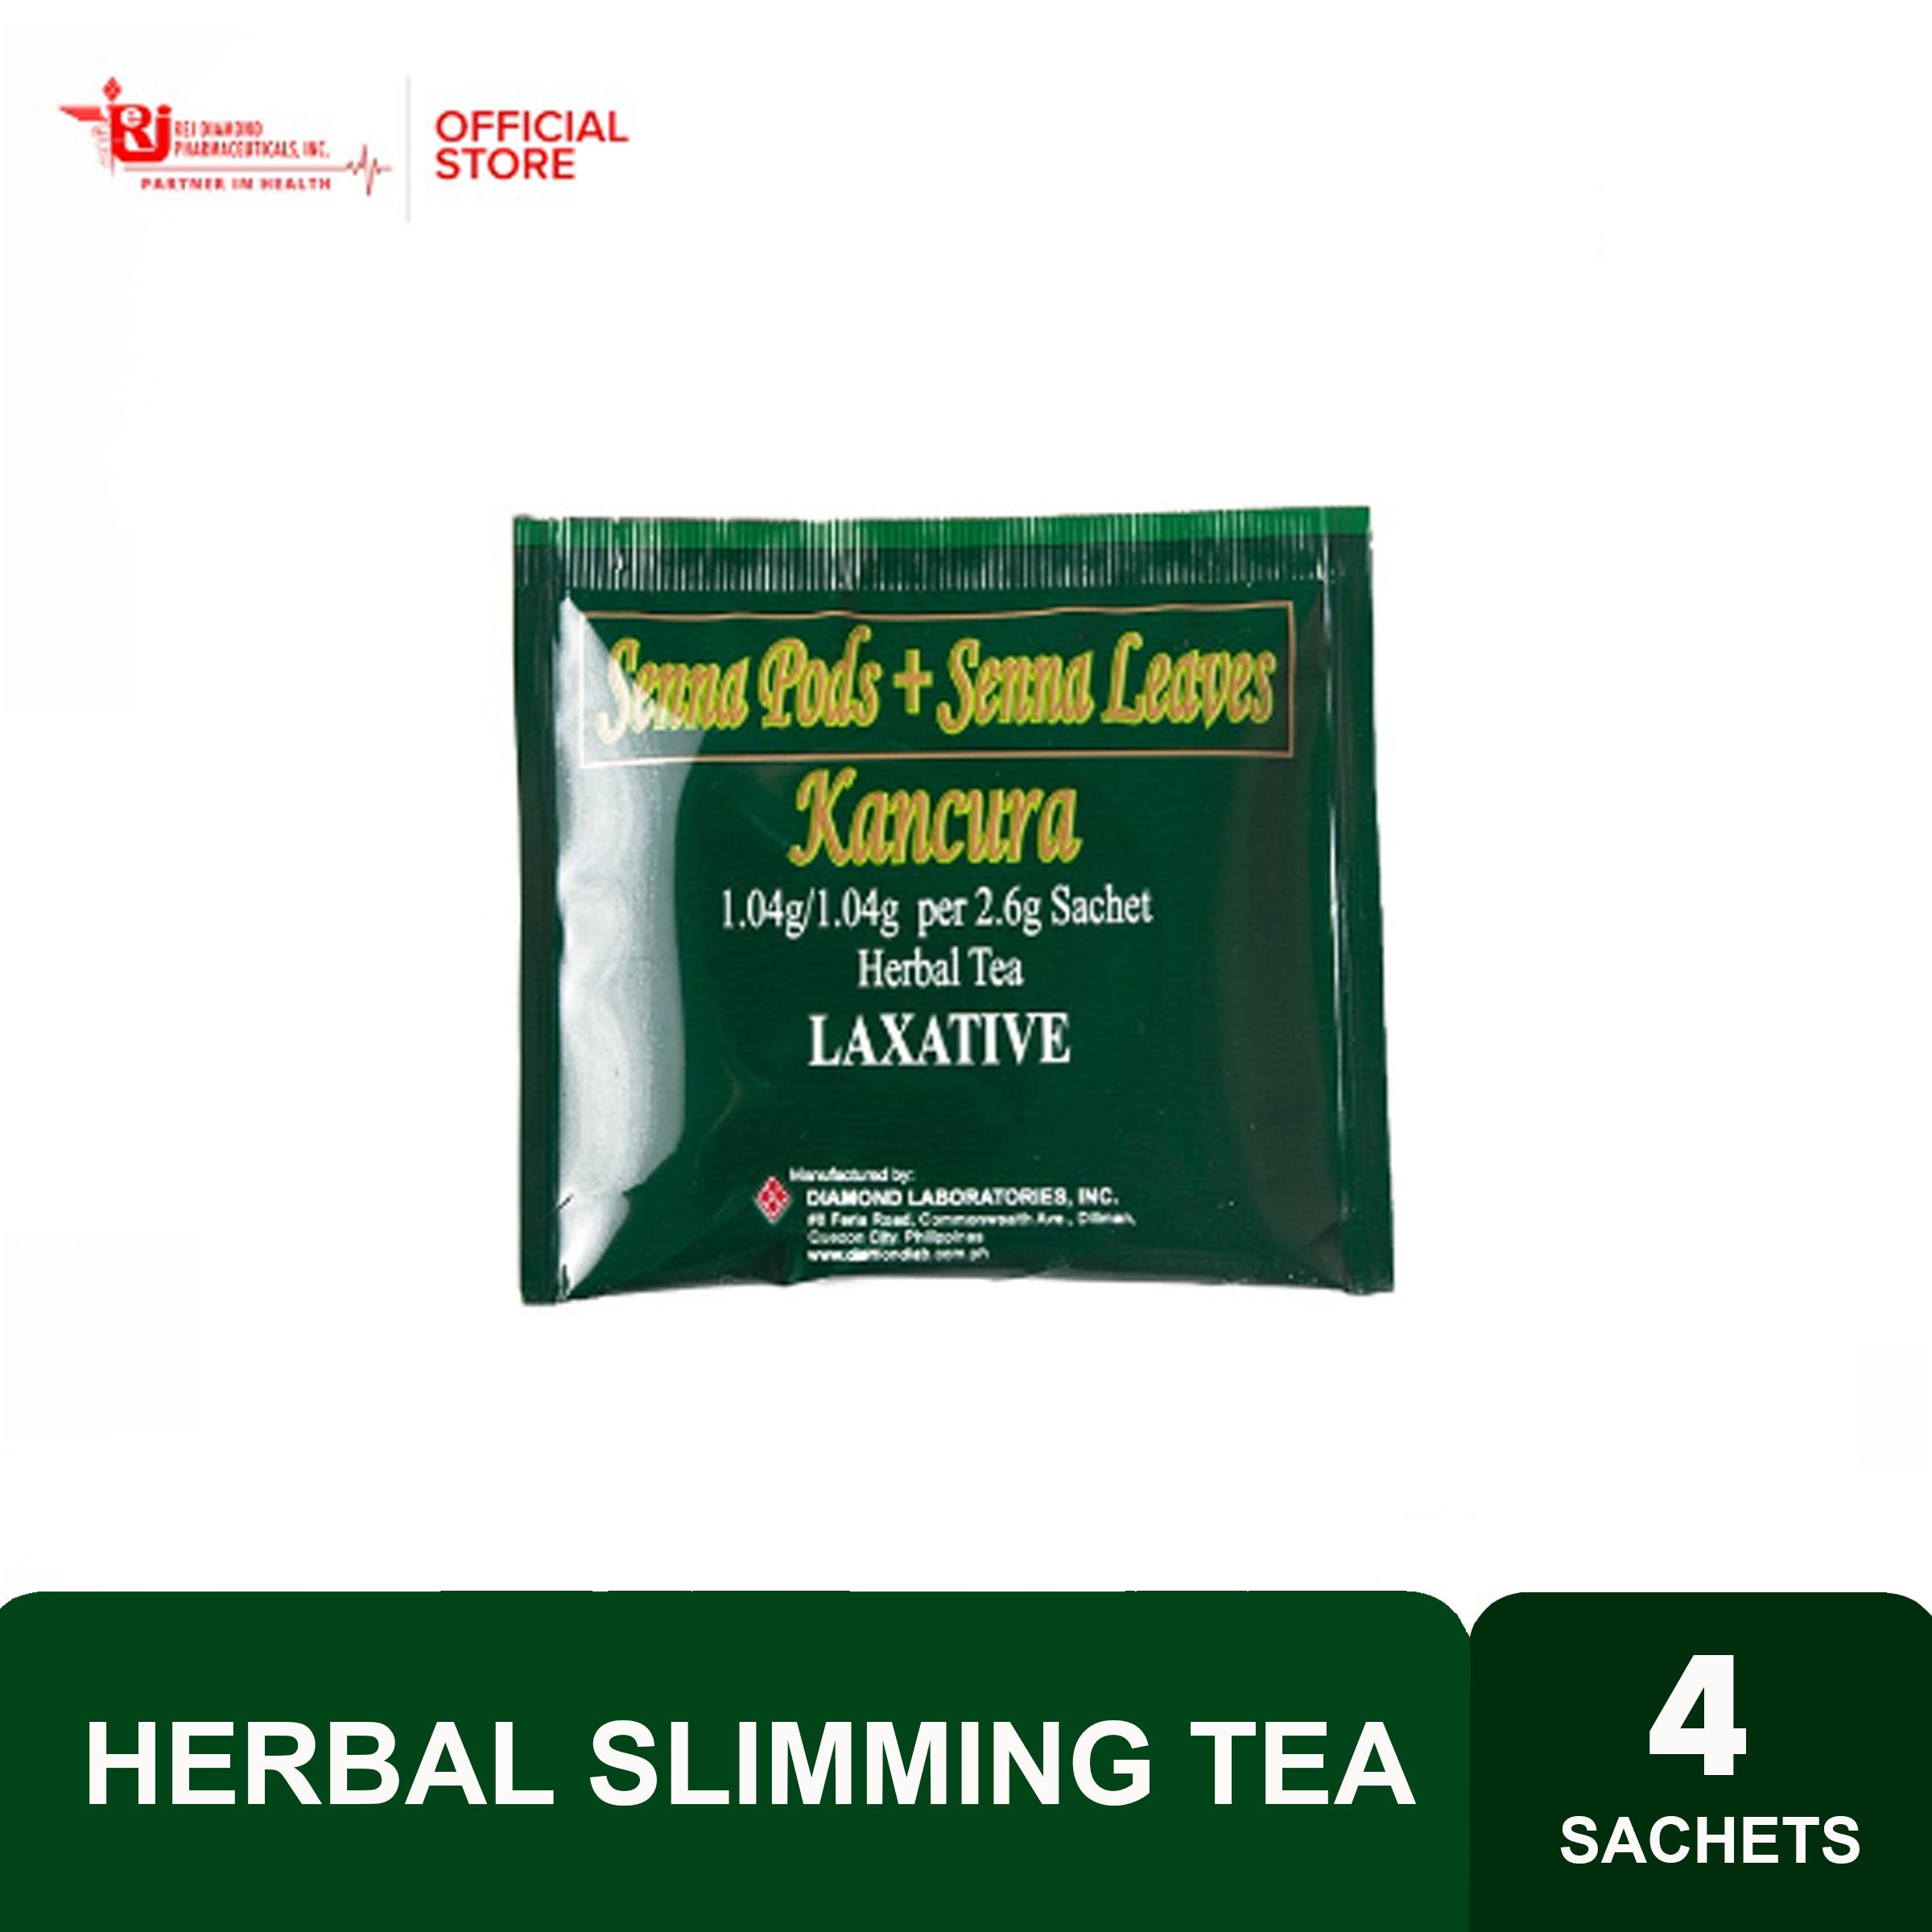 Kancura Herbal Slimming Tea 4 Sachets